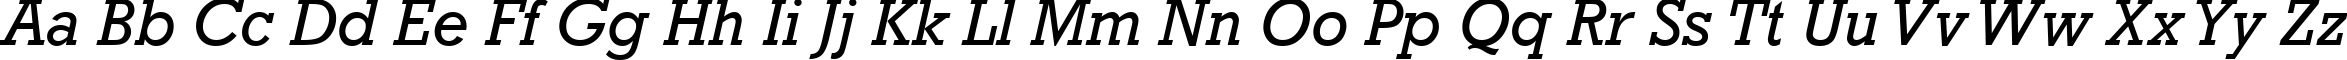 Пример написания английского алфавита шрифтом Rockwell Italic